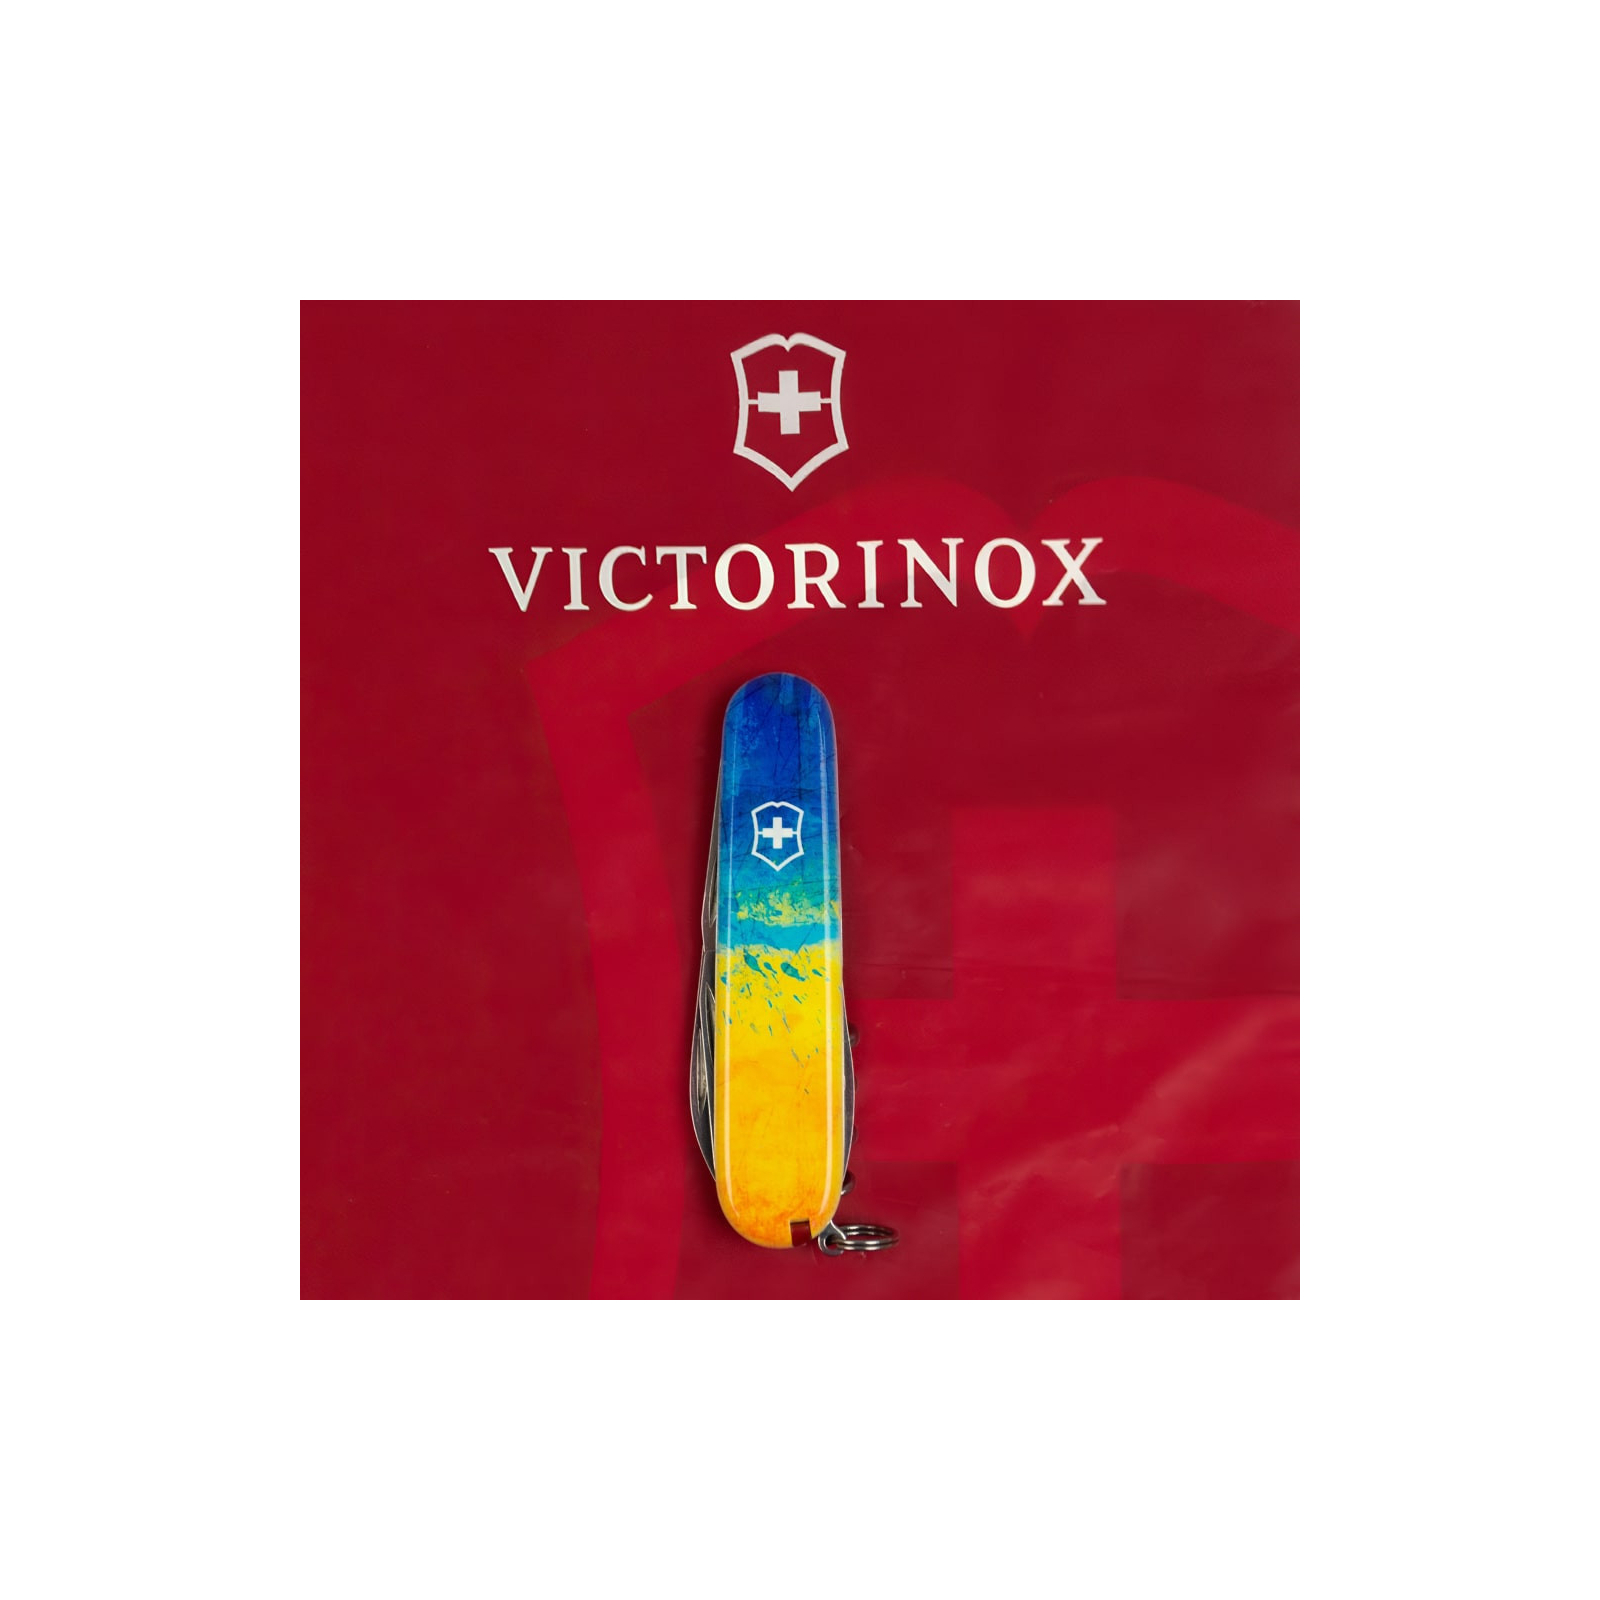 Нож Victorinox Spartan Ukraine 91 мм Жовто-синій малюнок (1.3603.7_T3100p) изображение 9